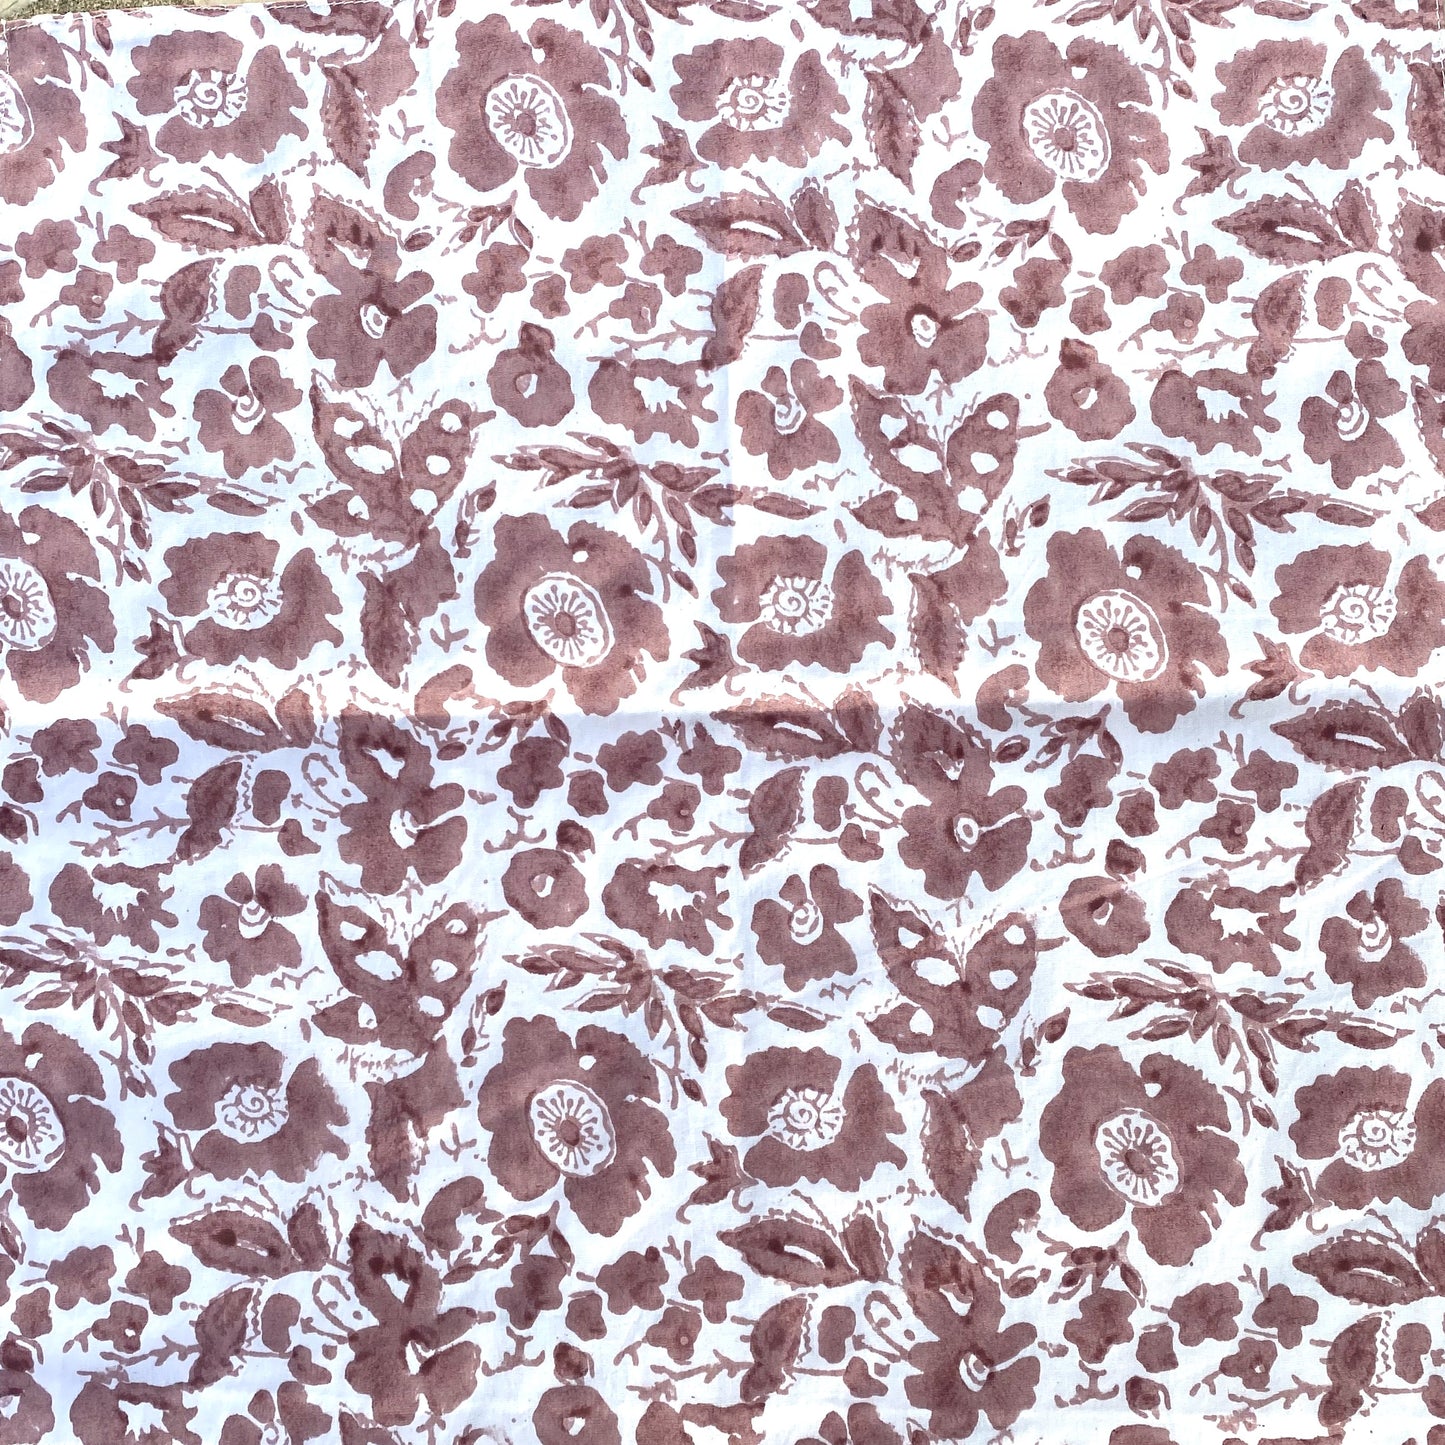 4 x block print floral vintage cotton napkin dusty pink